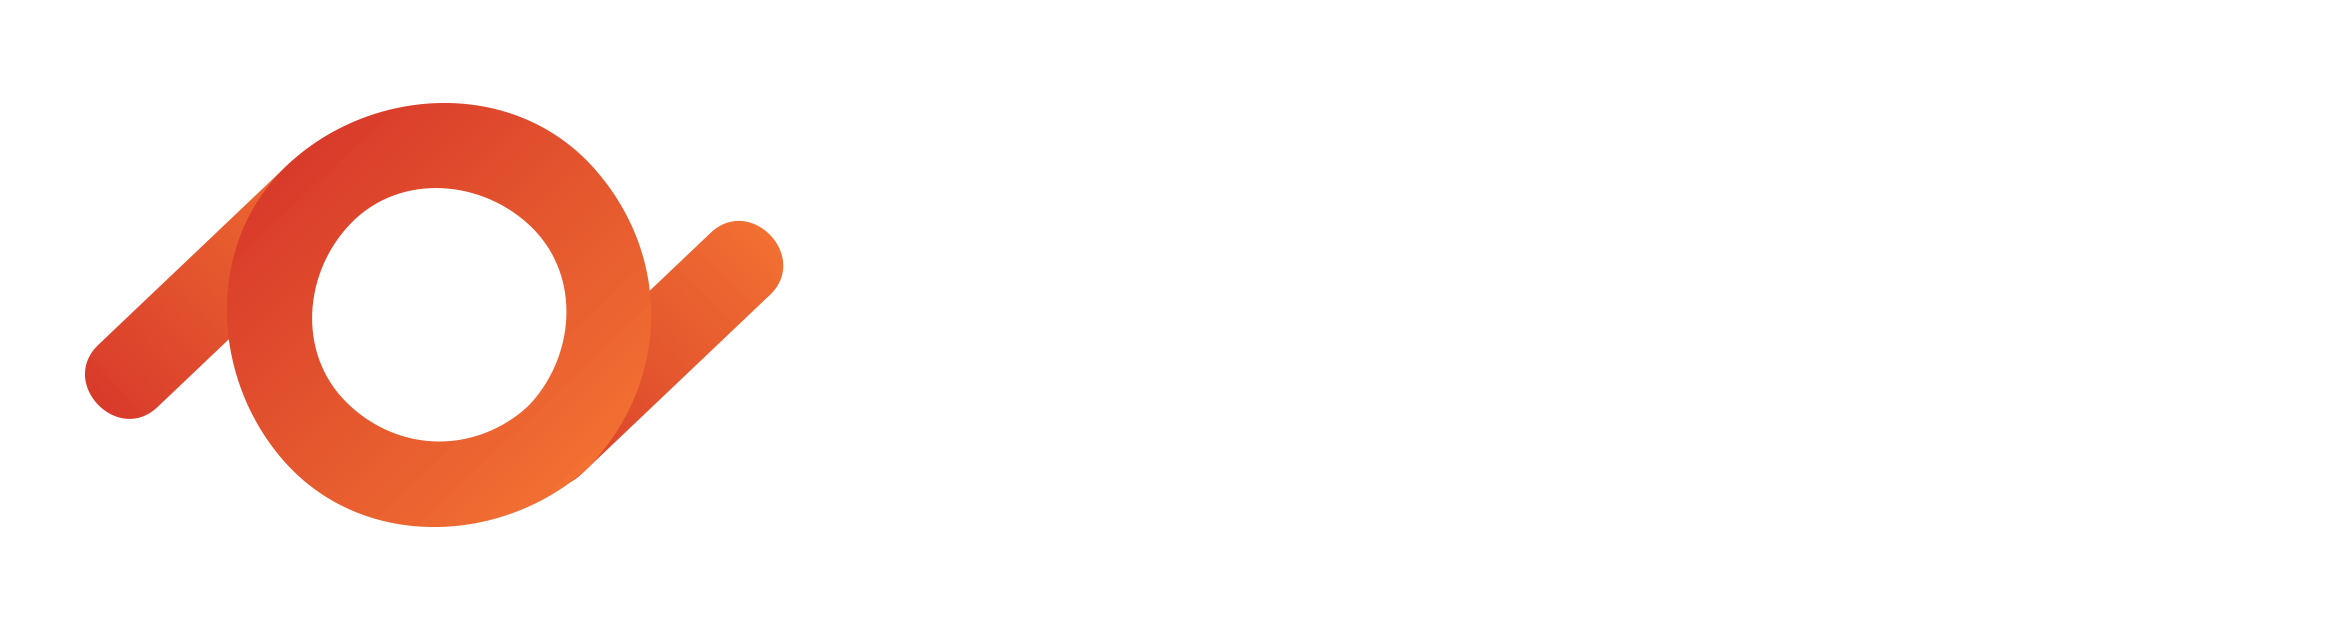 logo dataproject blanc